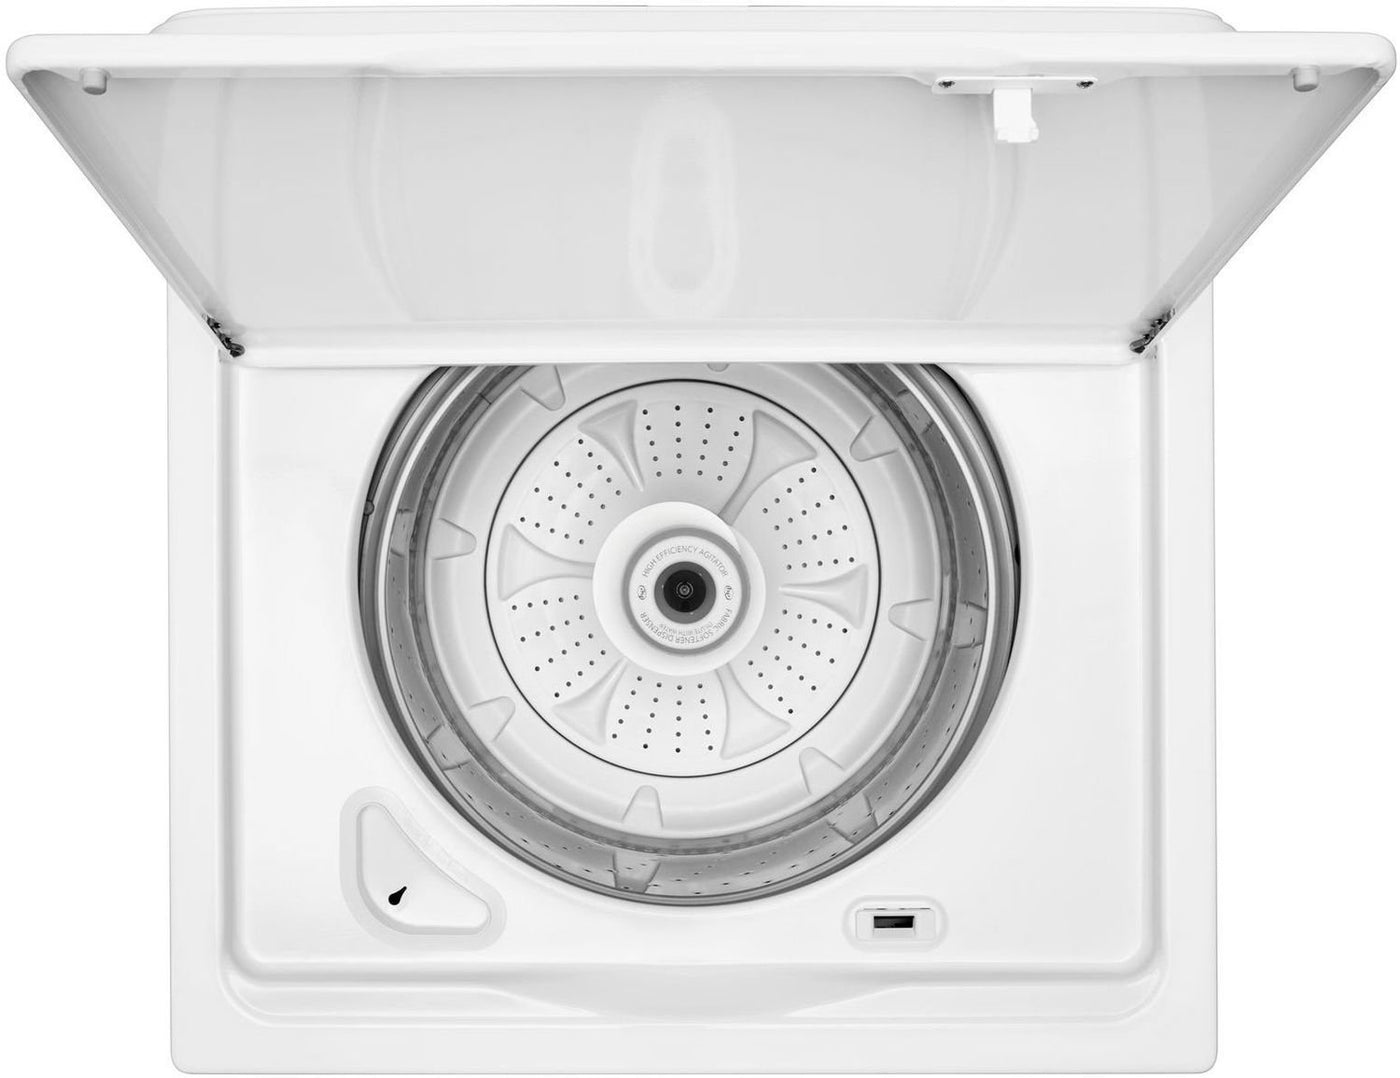 Whirlpool White Top-Load Washer (4.4 Cu. Ft. IEC) - WTW4855HW